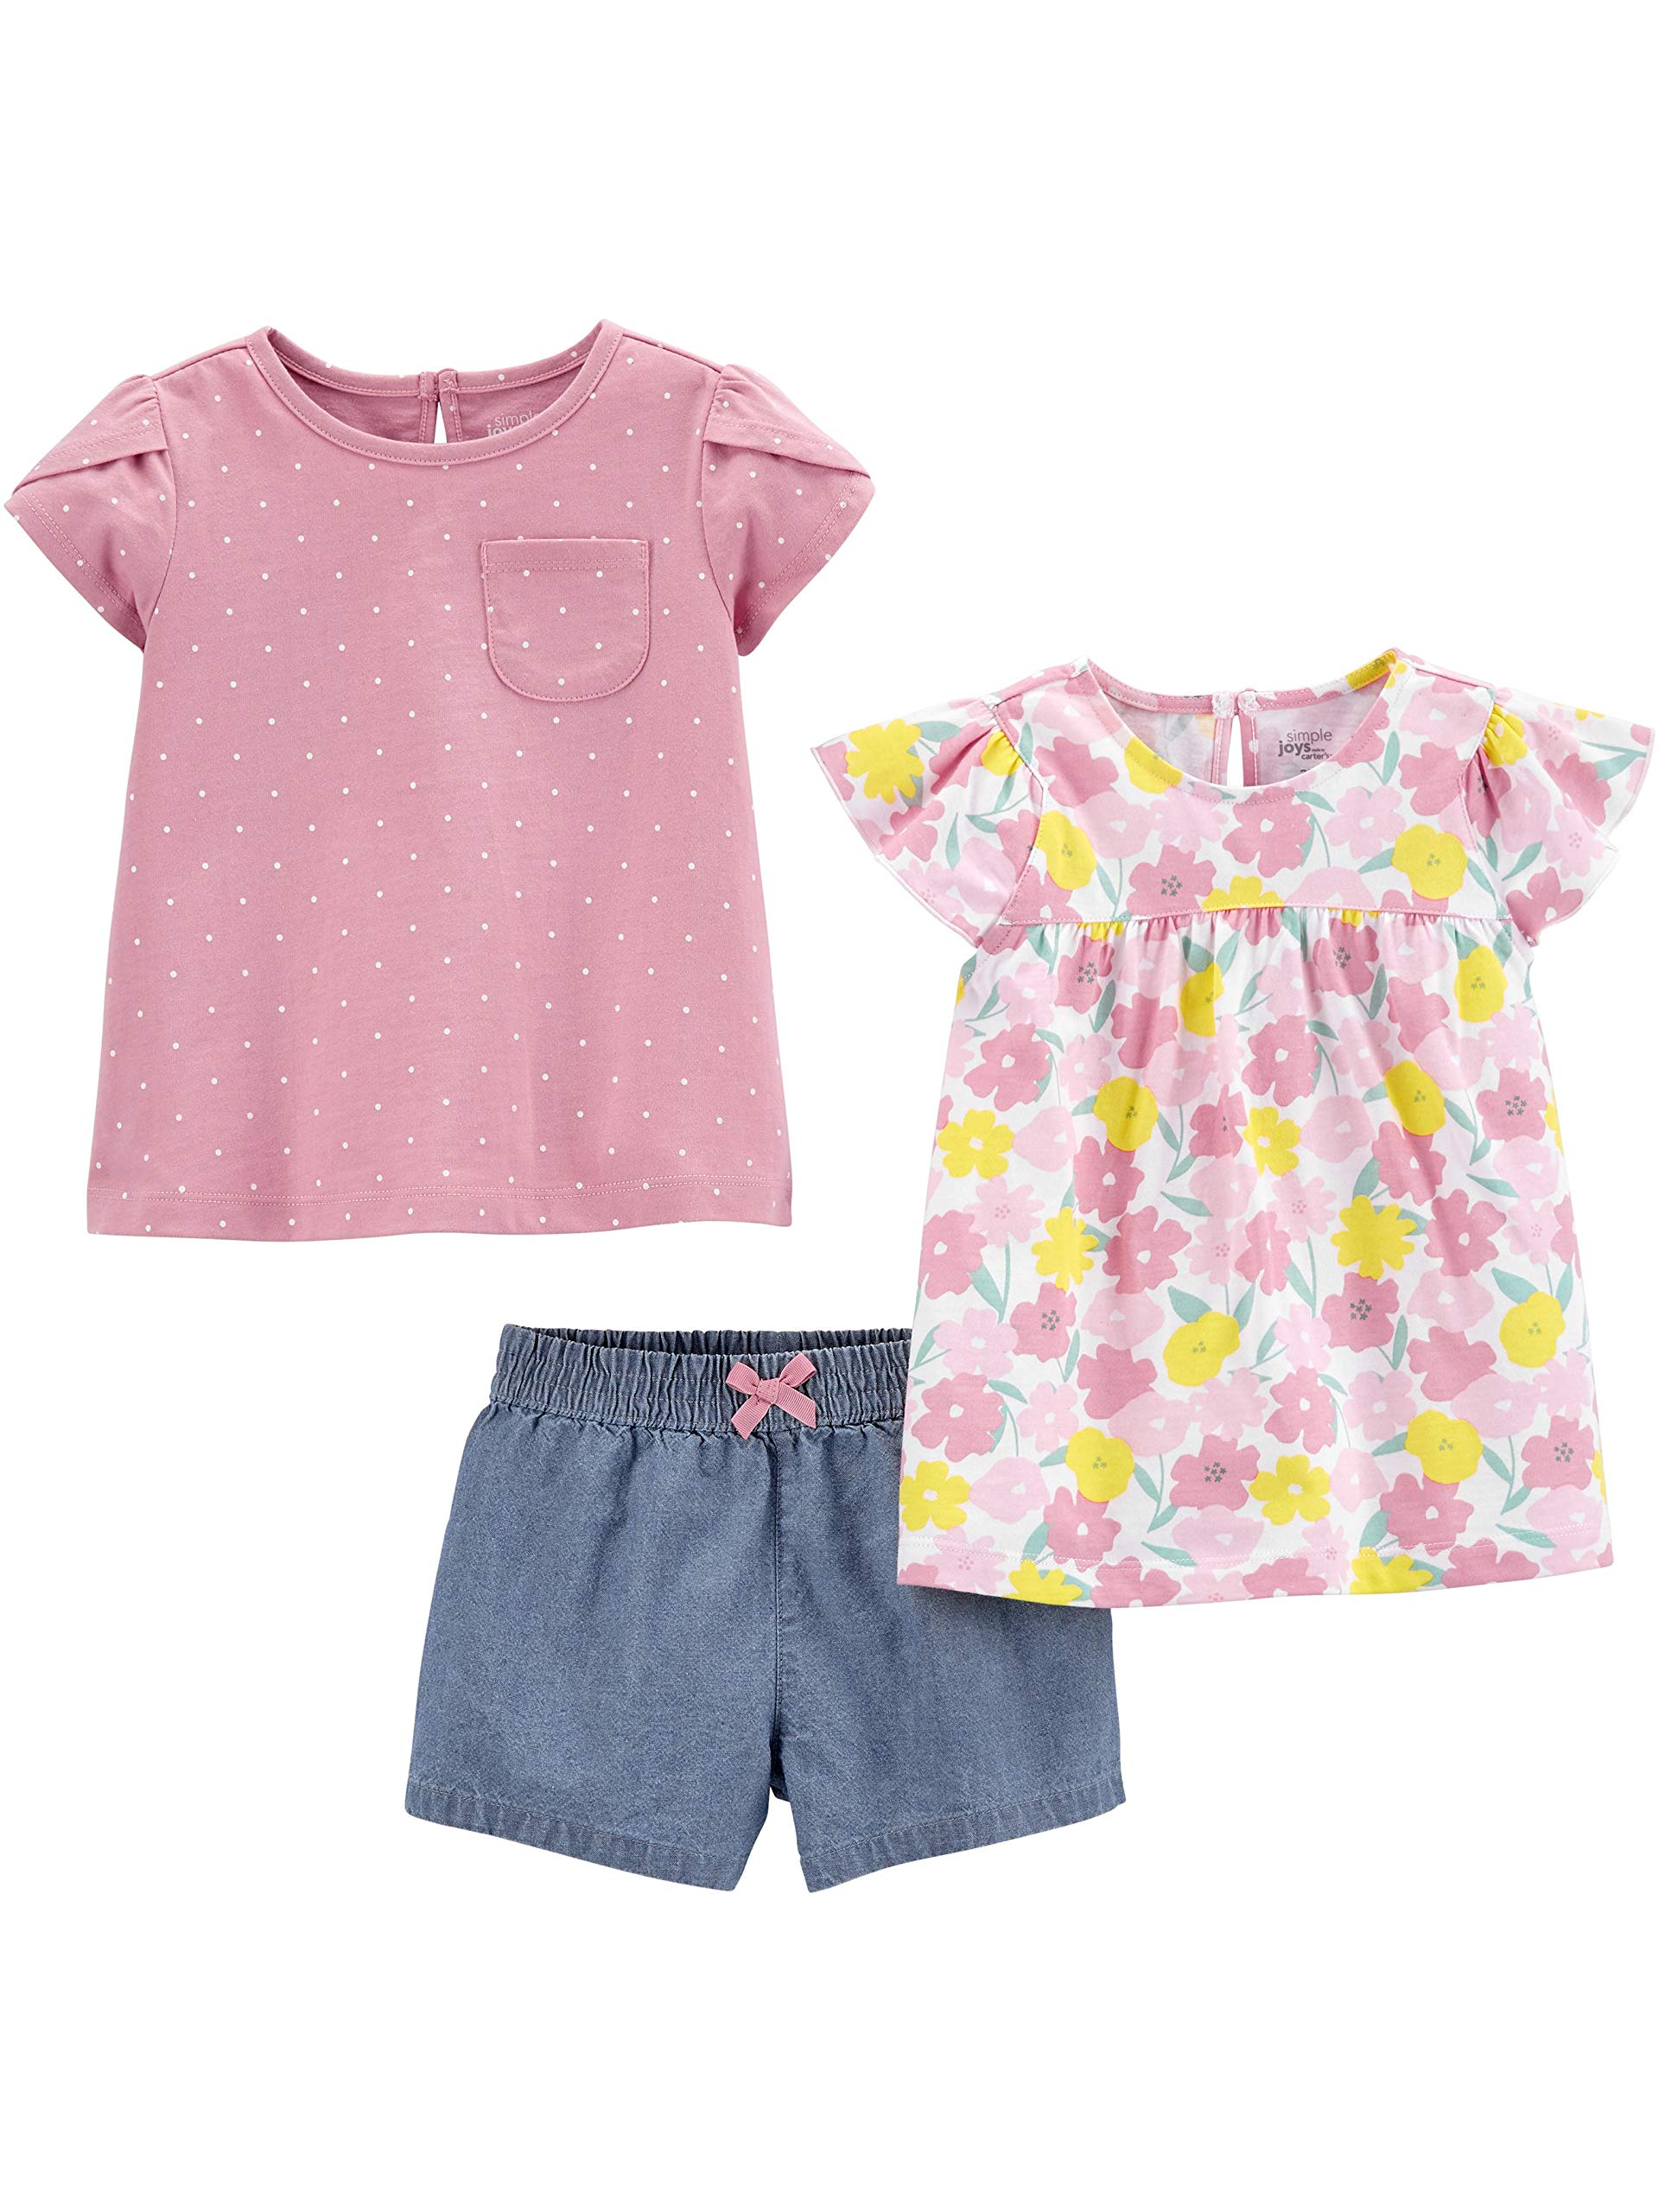 Simple Joys by Carter's Toddler Girls' 3-Piece Playwear Set, Denim/Pink Dots/White Floral, 4T